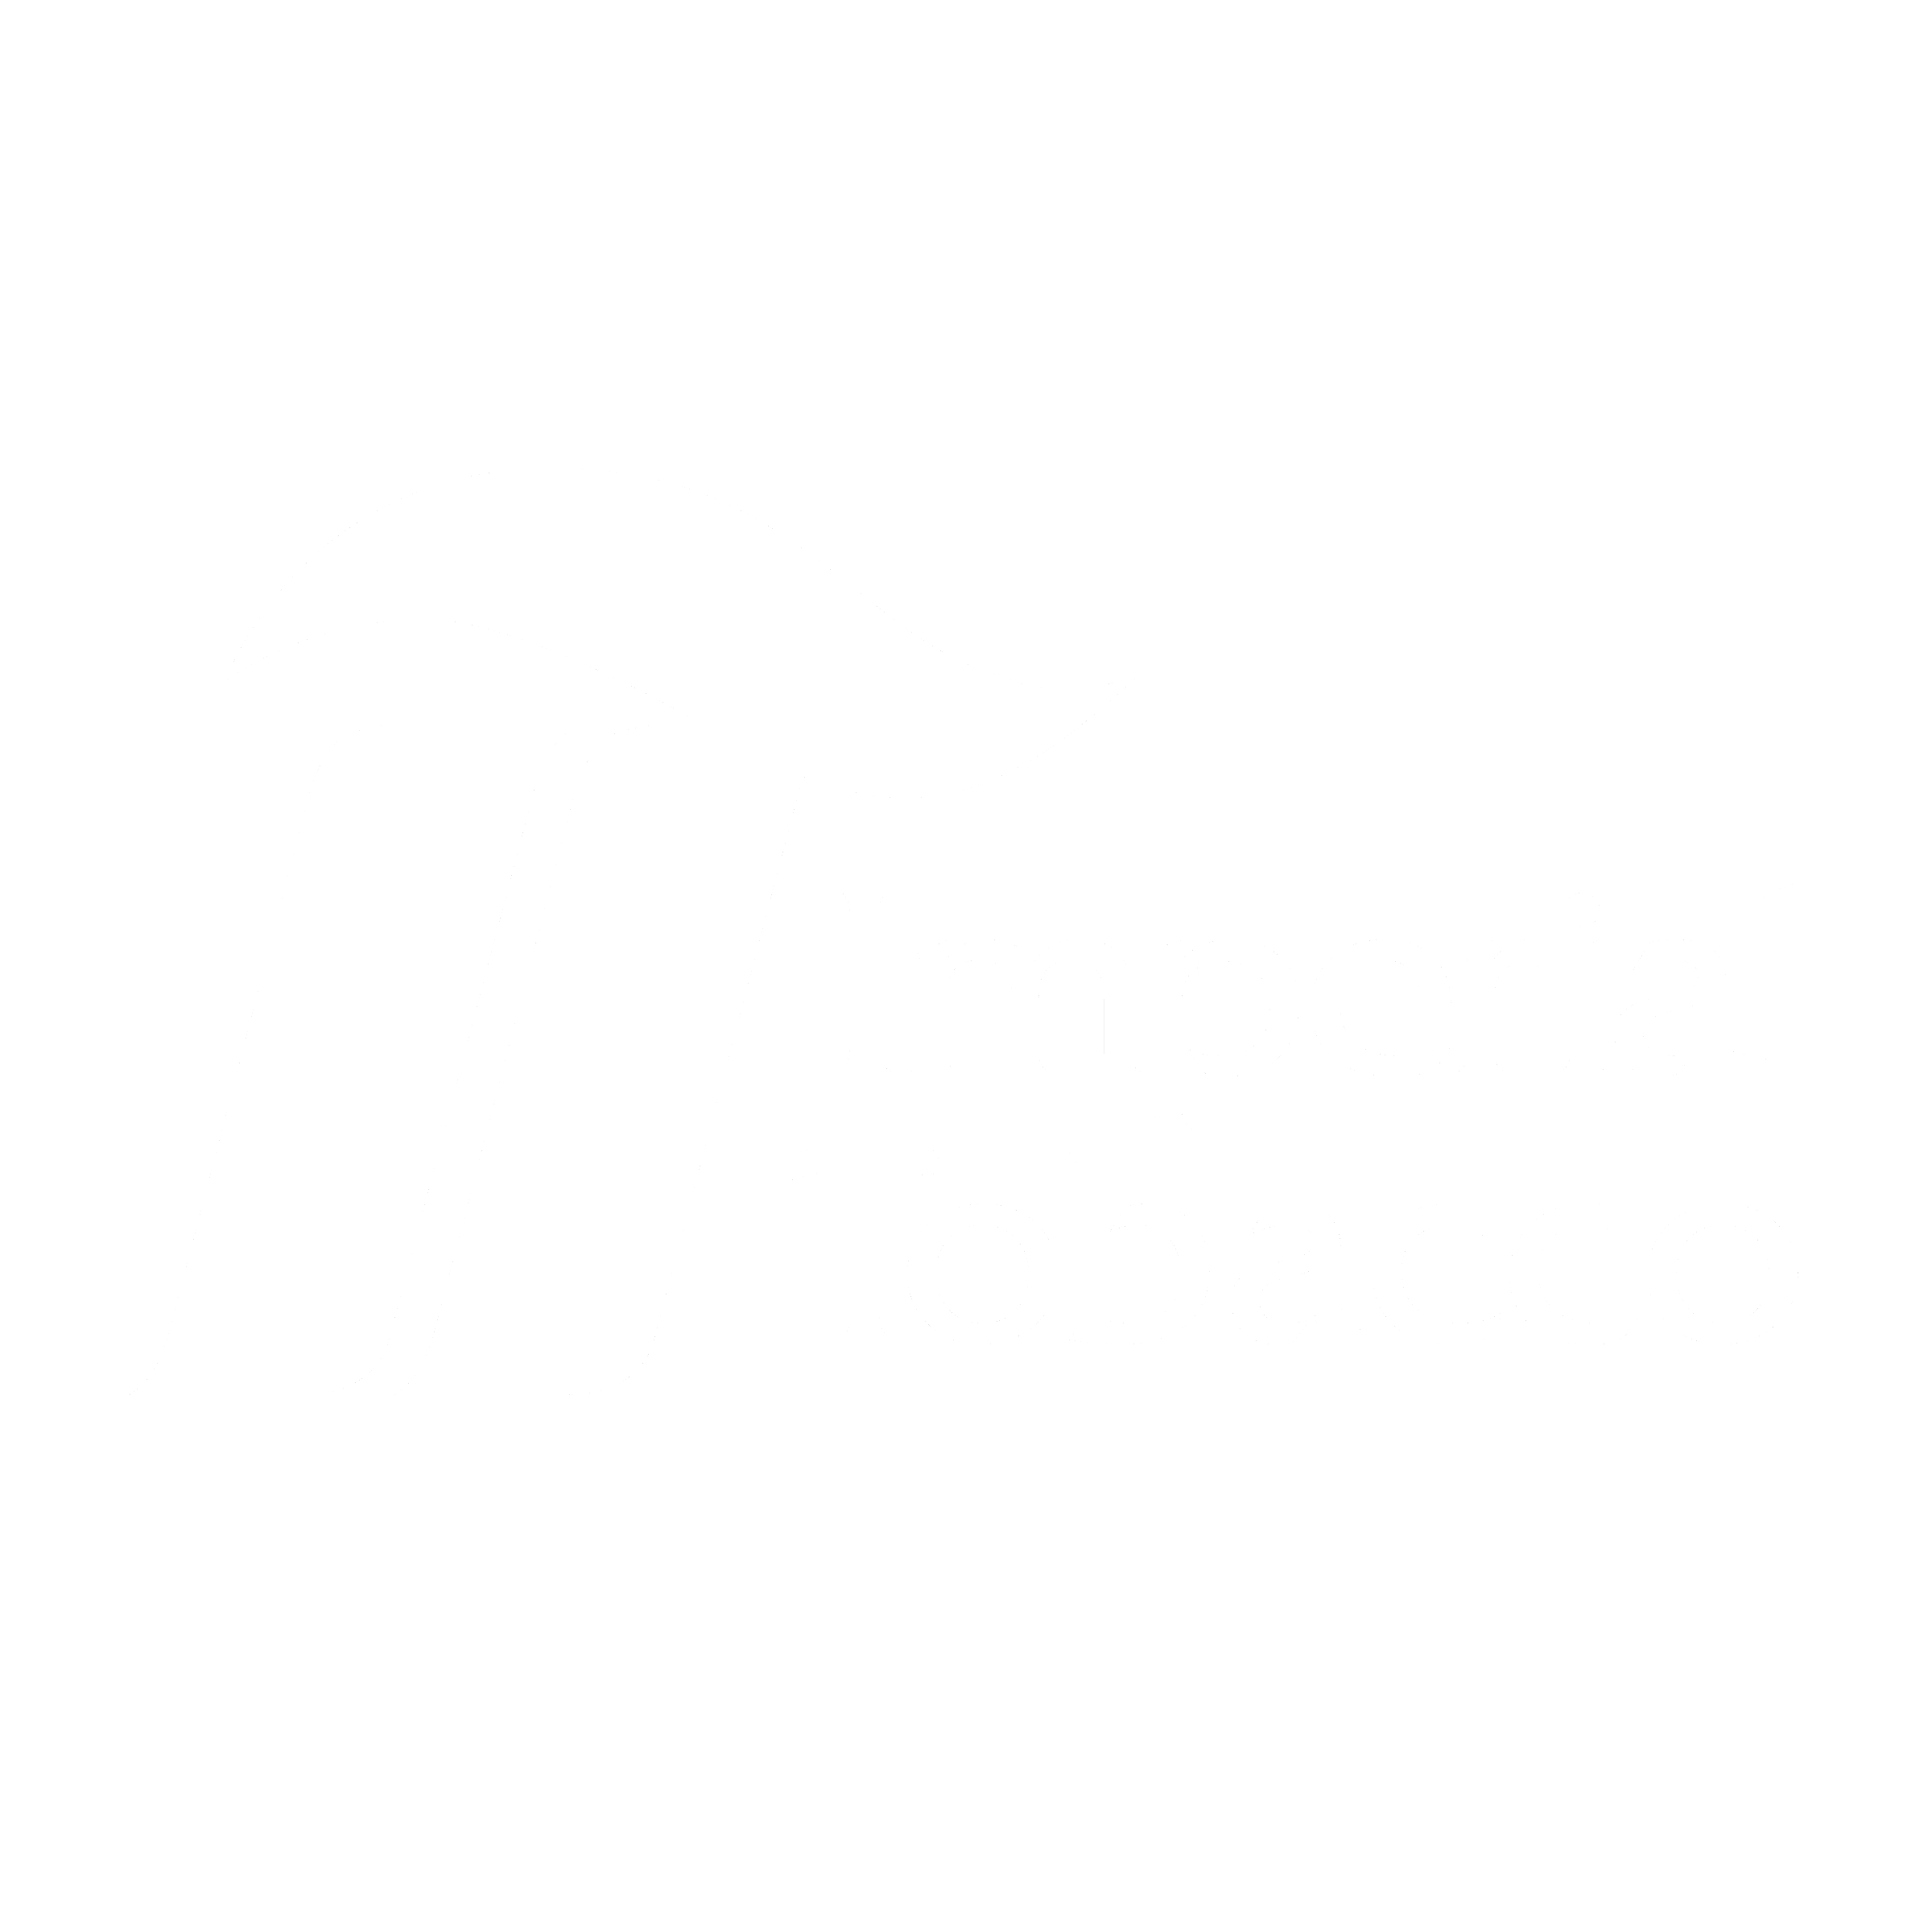 Imperial Tobacco Logo - Imperial Tobacco Logo PNG Transparent & SVG Vector - Freebie Supply